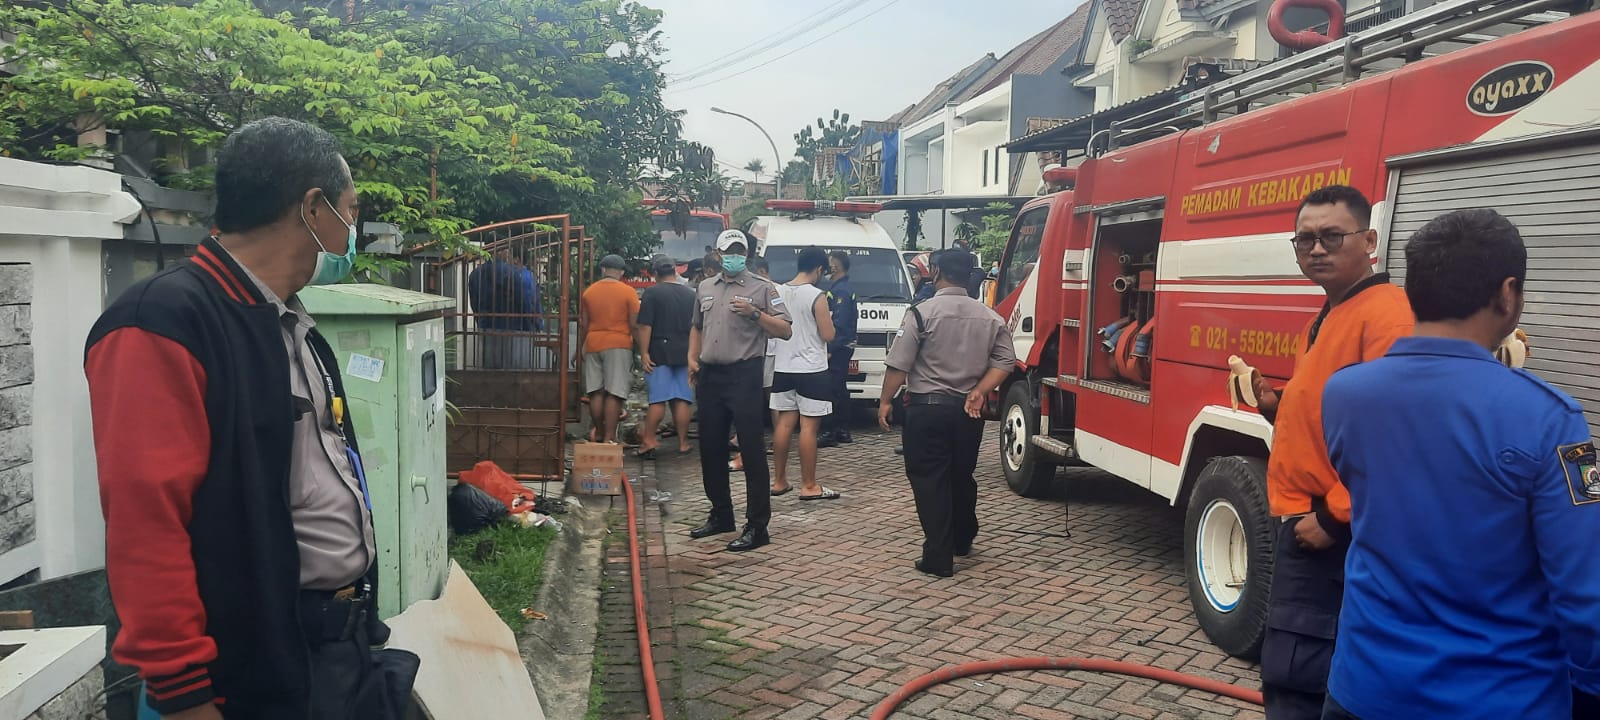 Petuga gabungan saat tiba di lokasi terbakar nya rumah di perumahan Metland Puri Blok B 7 No 10, Kelurahan Petir, Kecamatan Cipondoh, Kota Tangerang.